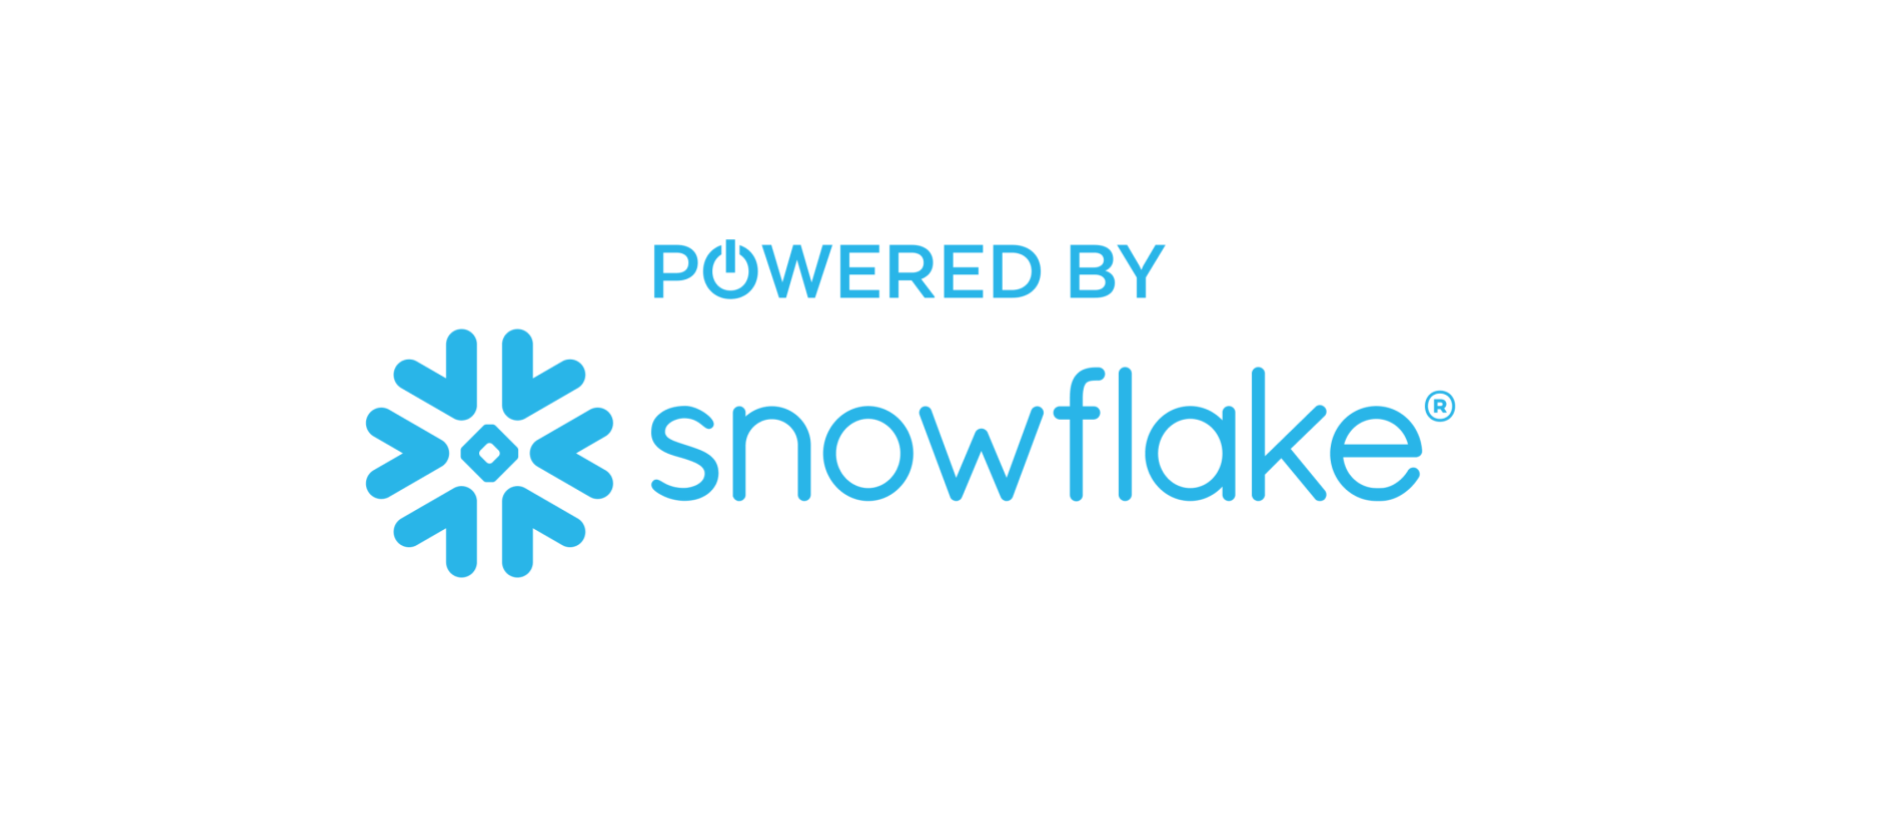 Logo Snowflake